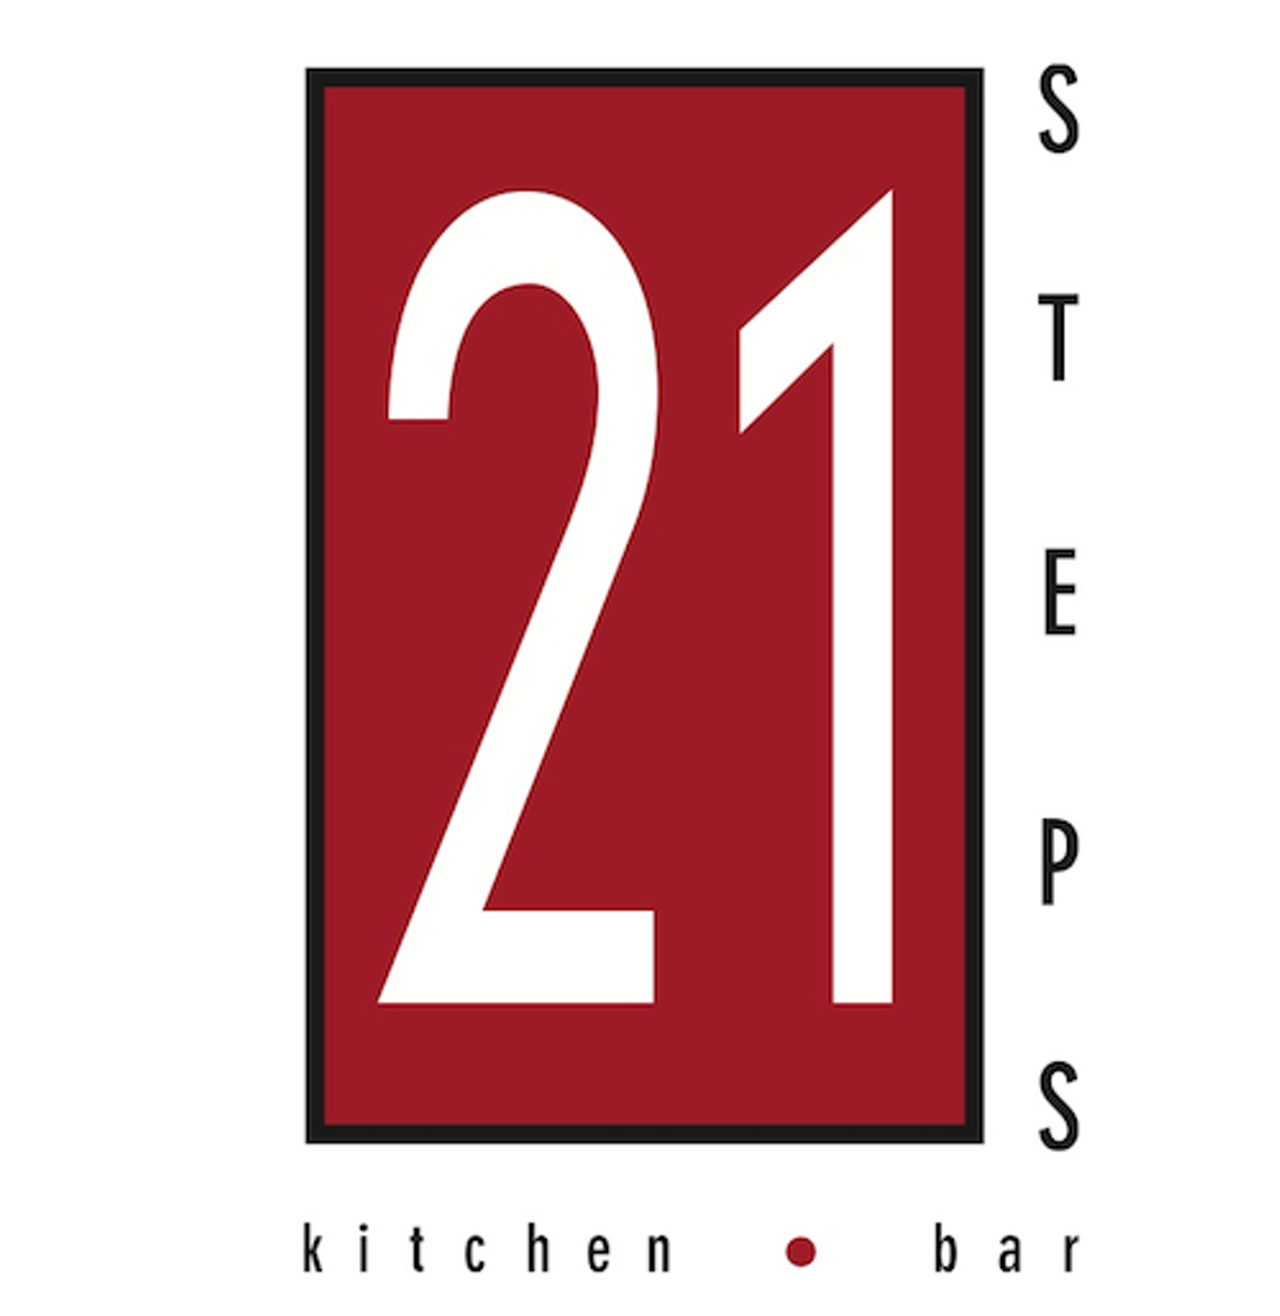 21 steps